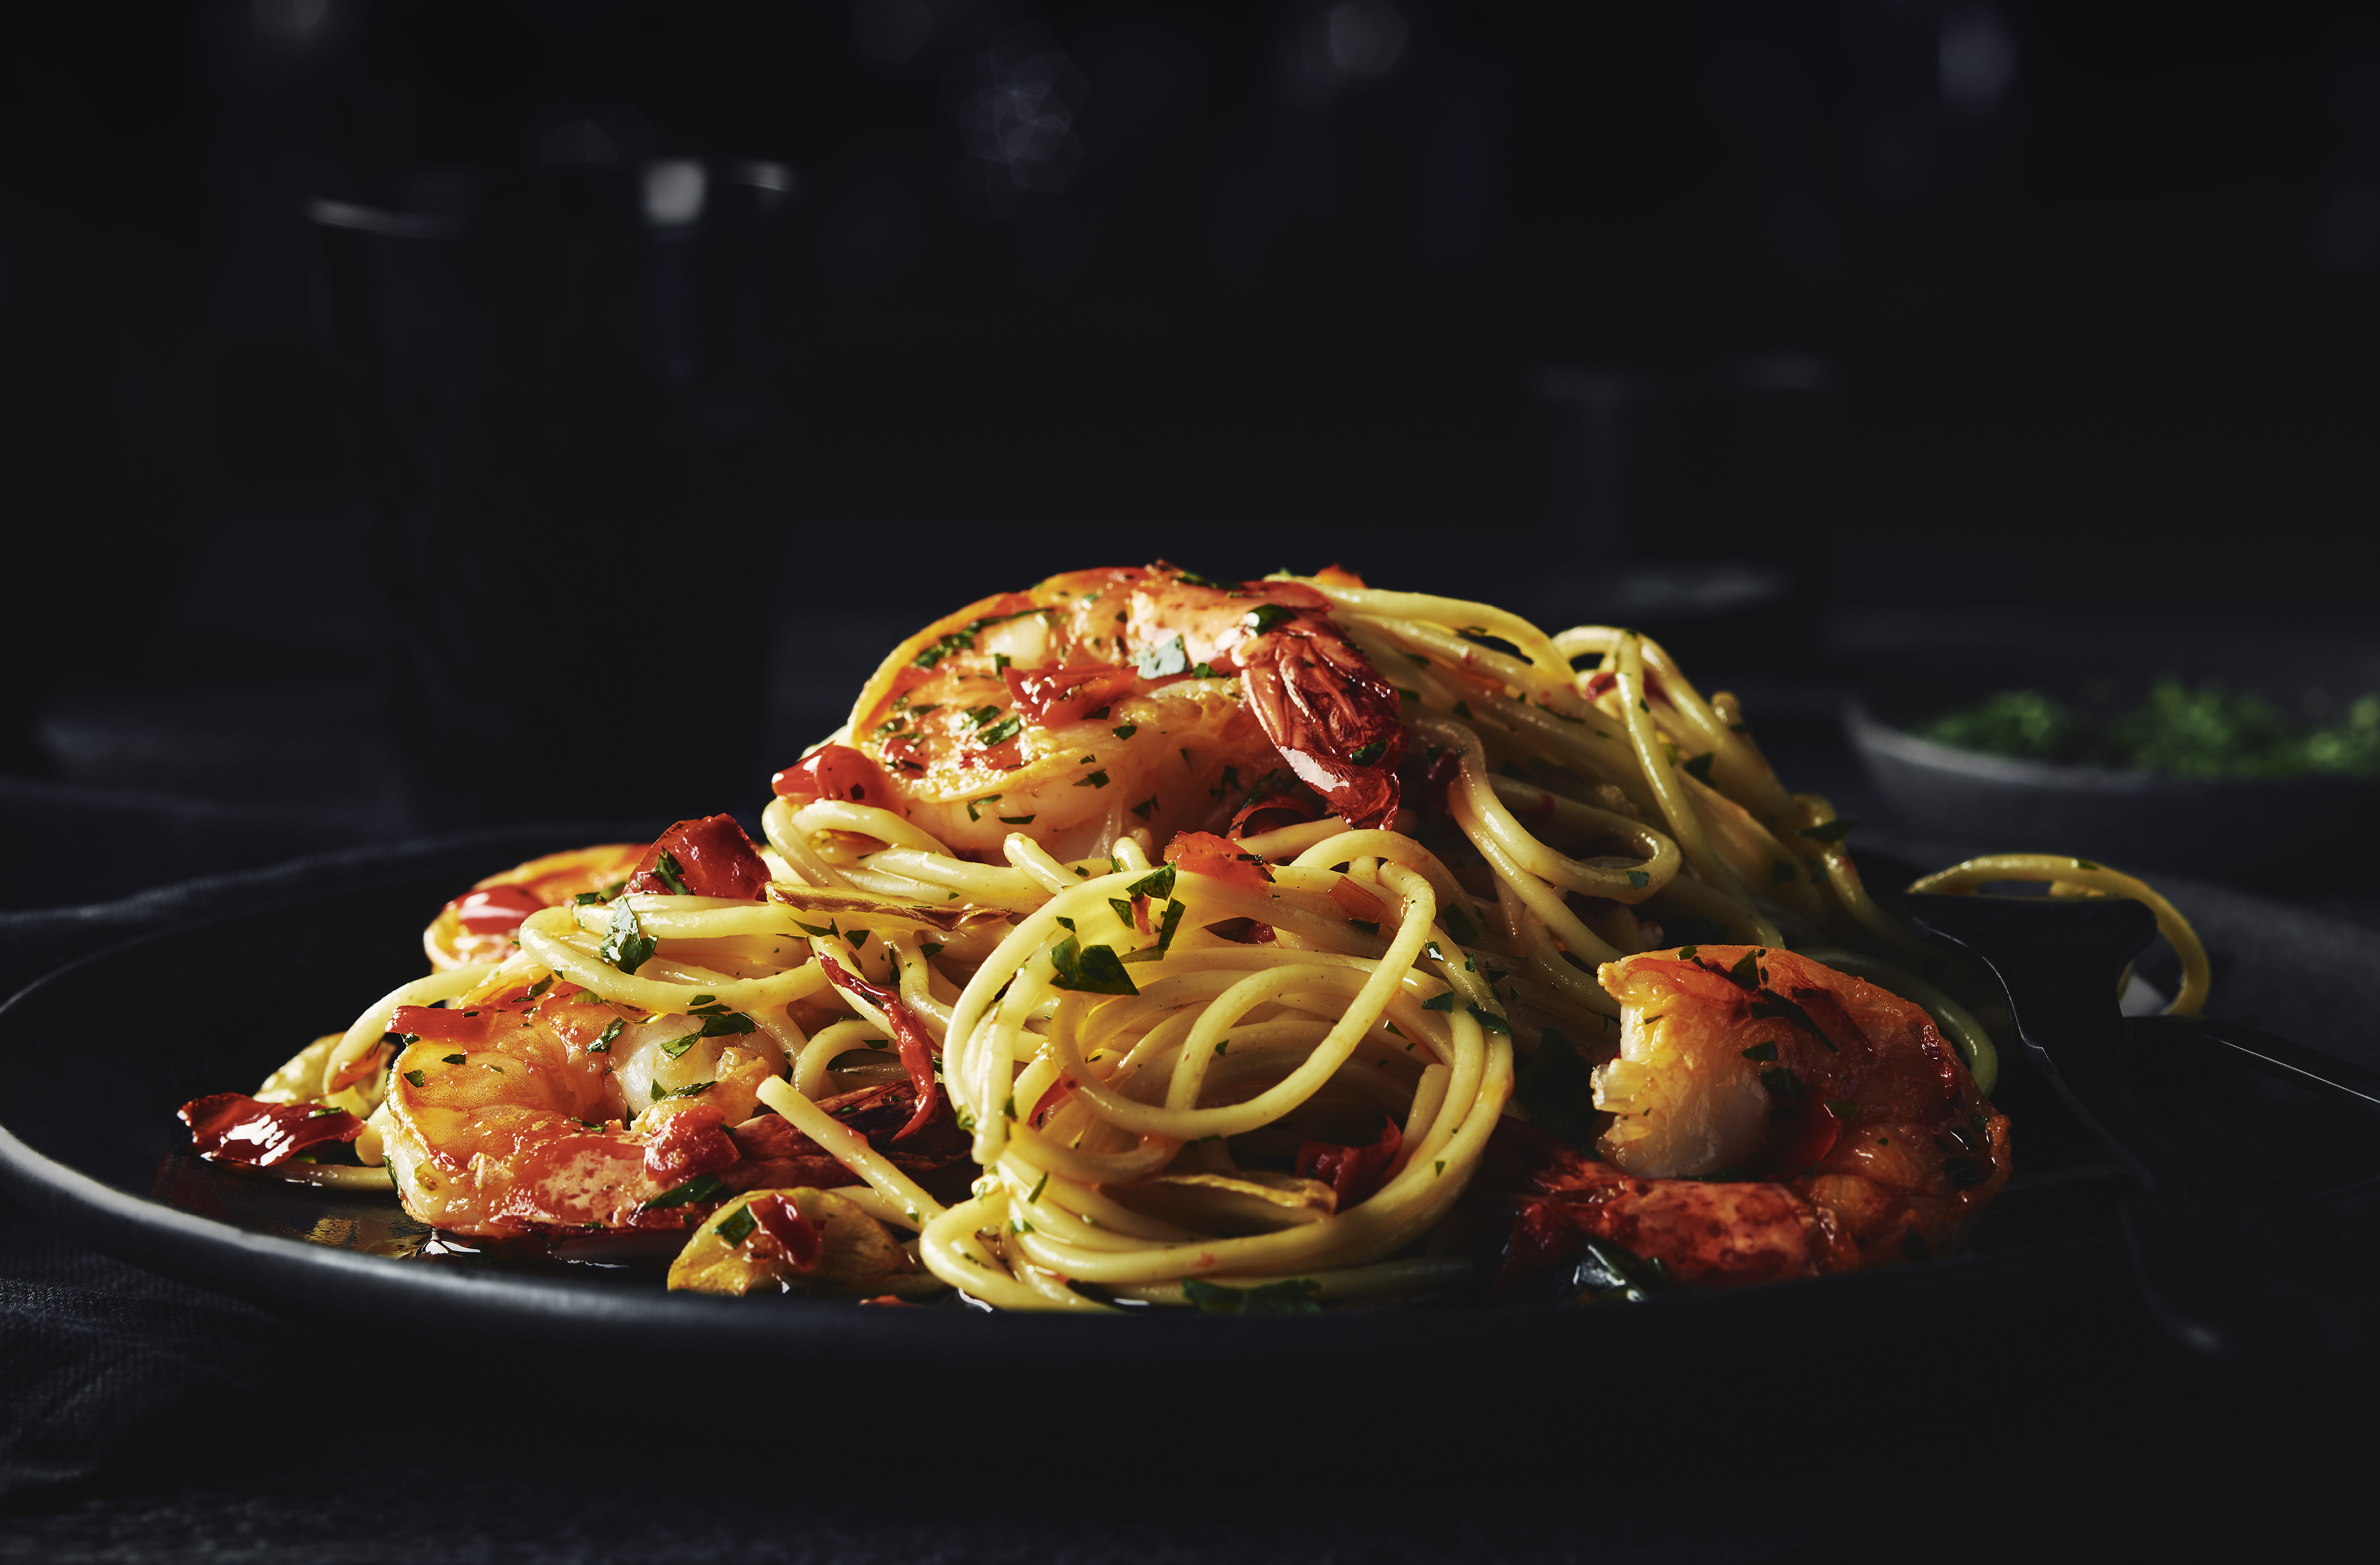 Shrimp cooked with peperoncini and spaghetti aglio e olio dish served on a plate